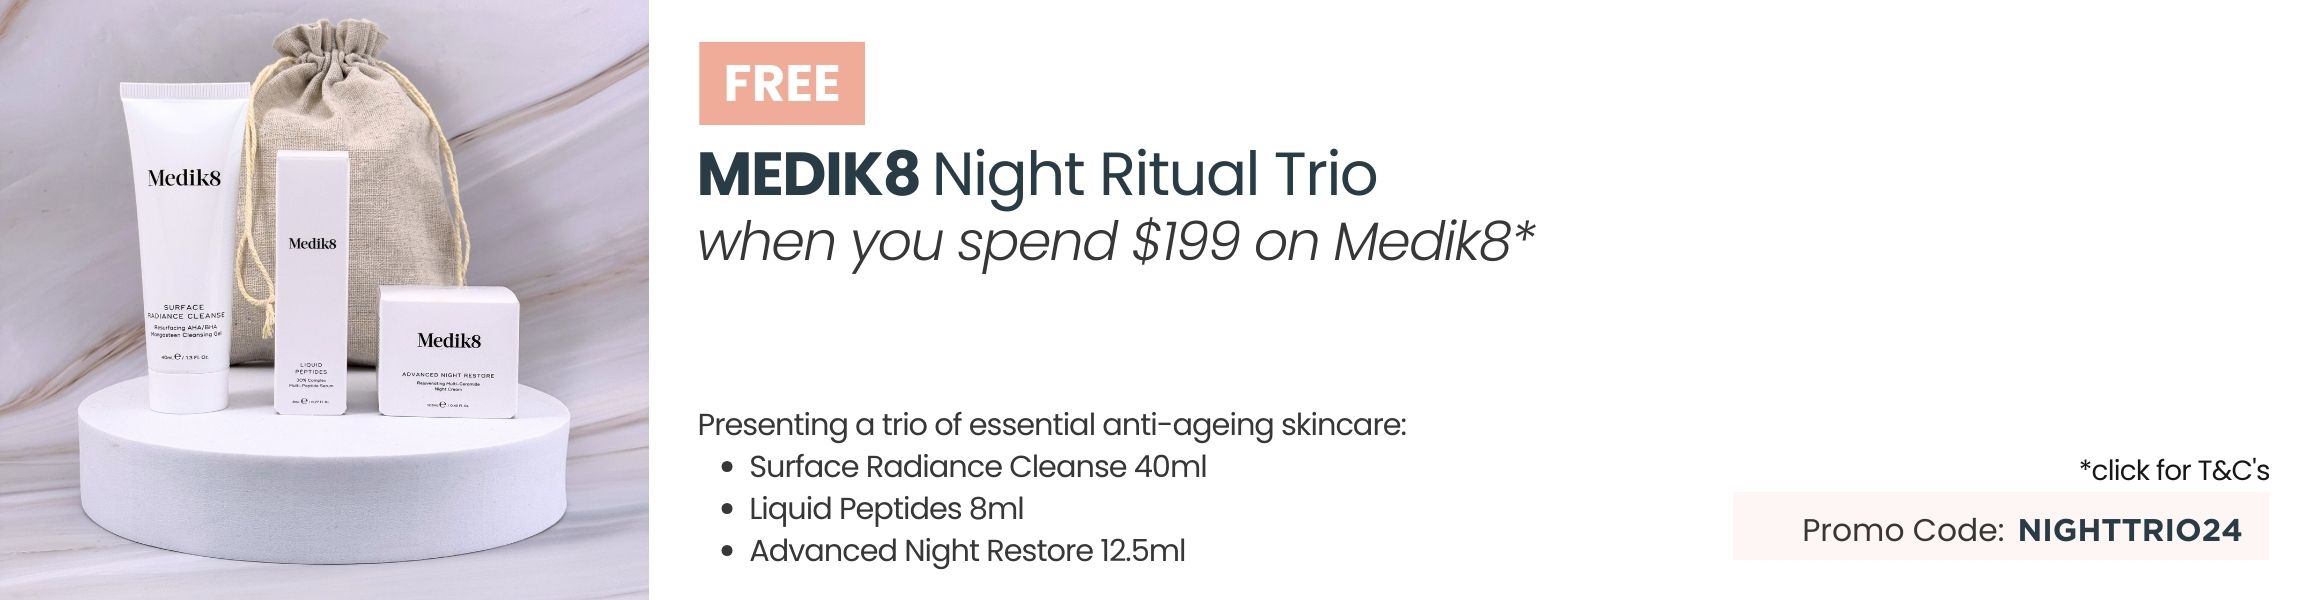 Free Medik8 Night Ritual Trio. Min spend $199 on Medi8. Promo code NIGHTTRIO24.